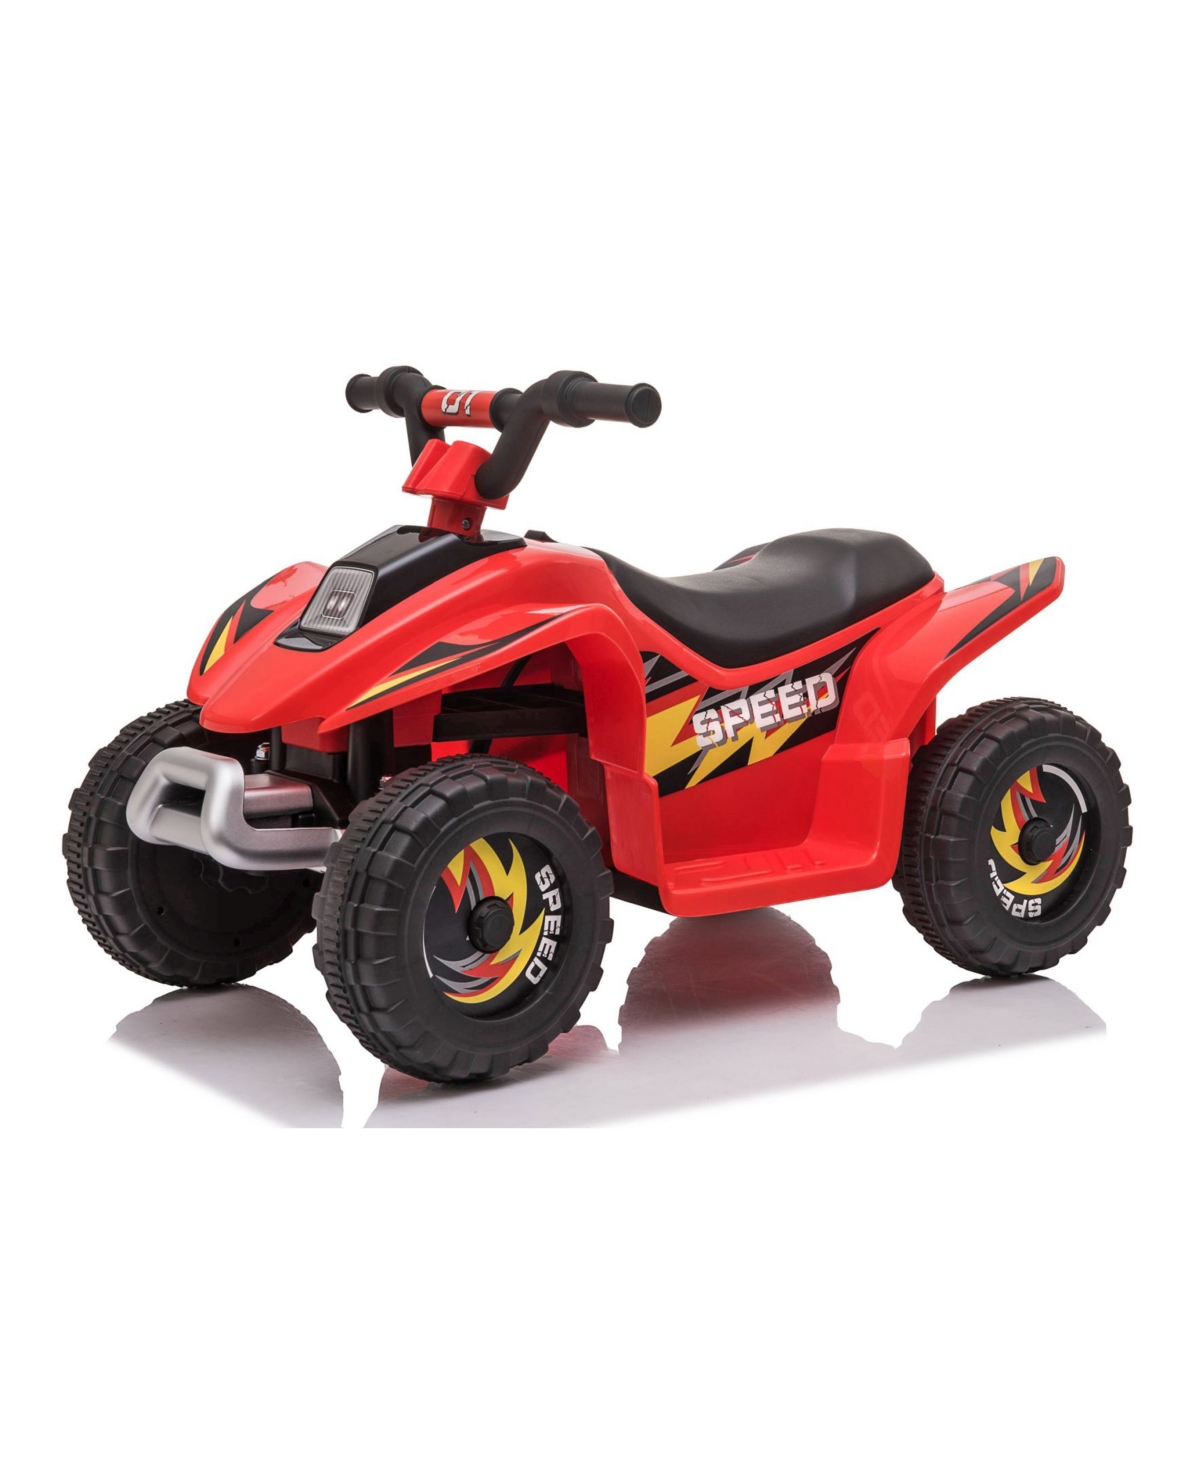 Blazin' Wheels Kids' 6 Volt Battery Operated Mini Quad Ride On In Red